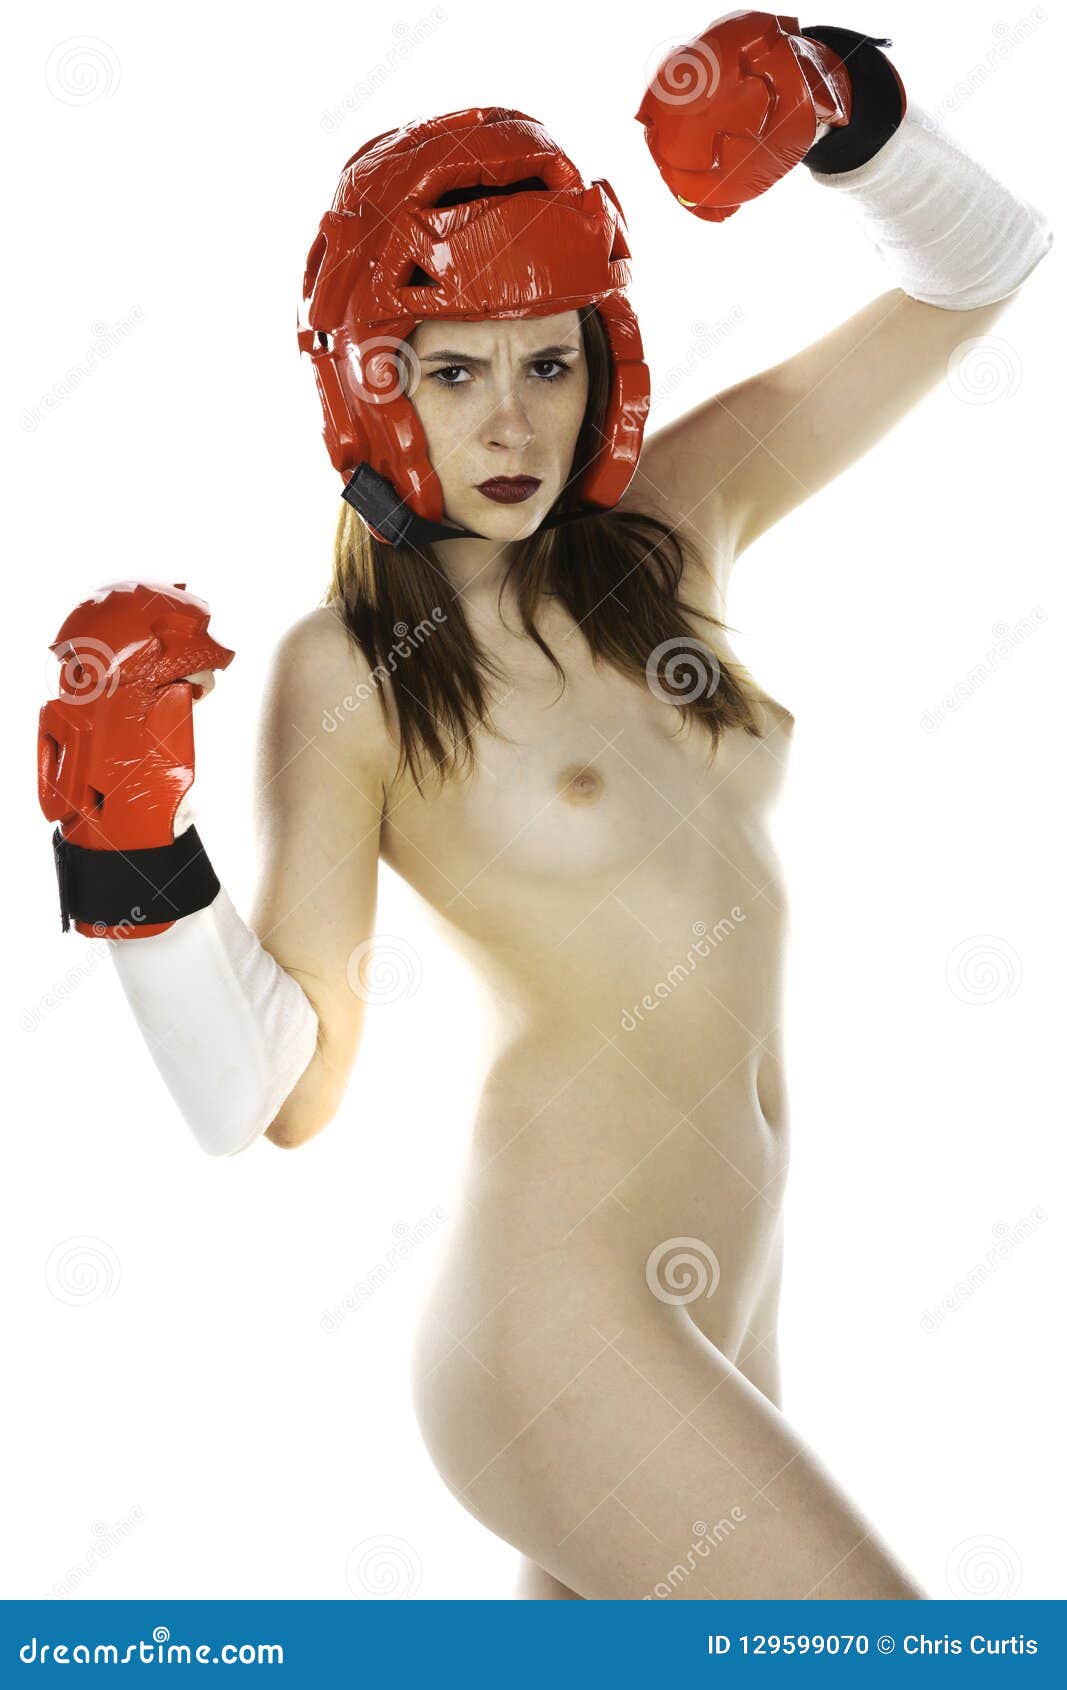 Female mma fighters nude